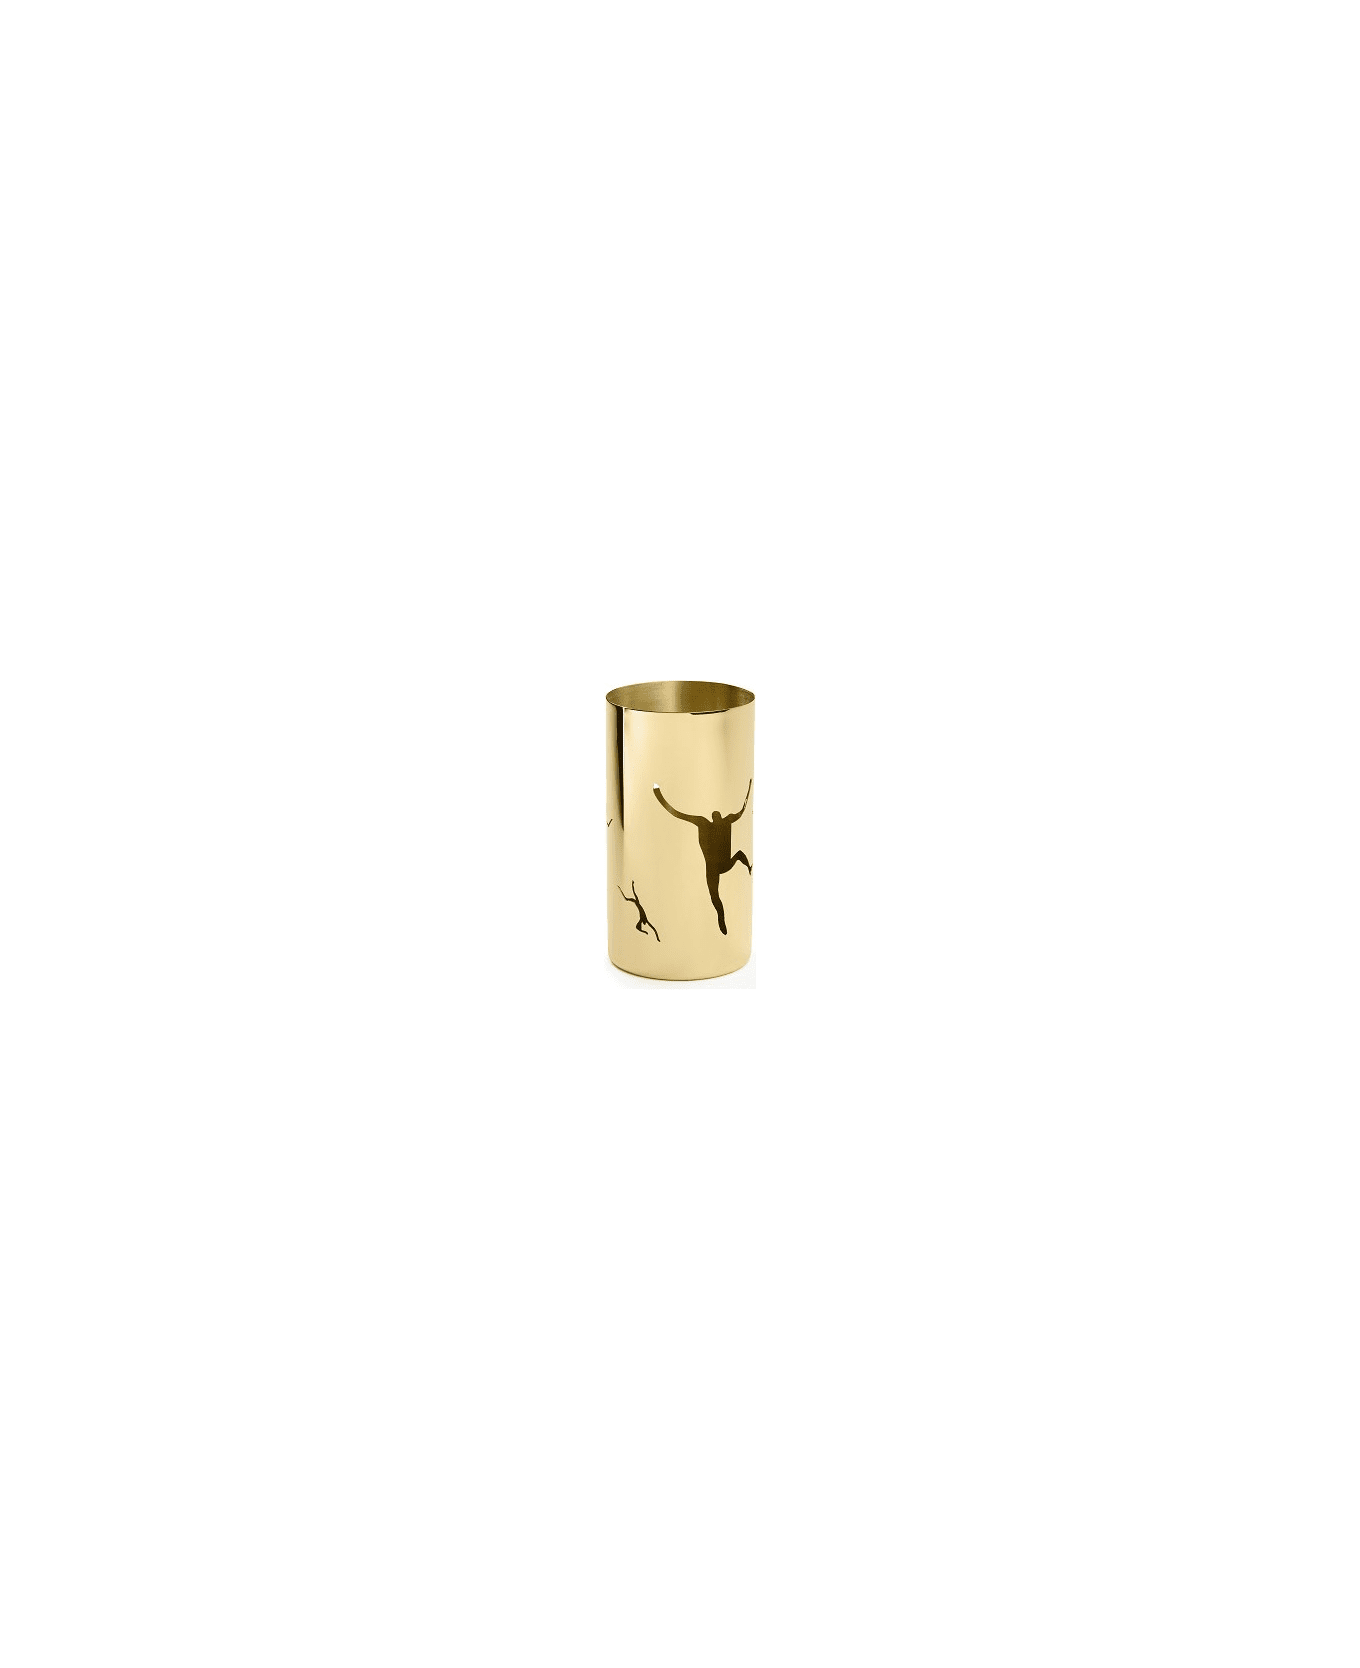 Ghidini 1961 Cylinder Bowl Polished Brass - Polished brass